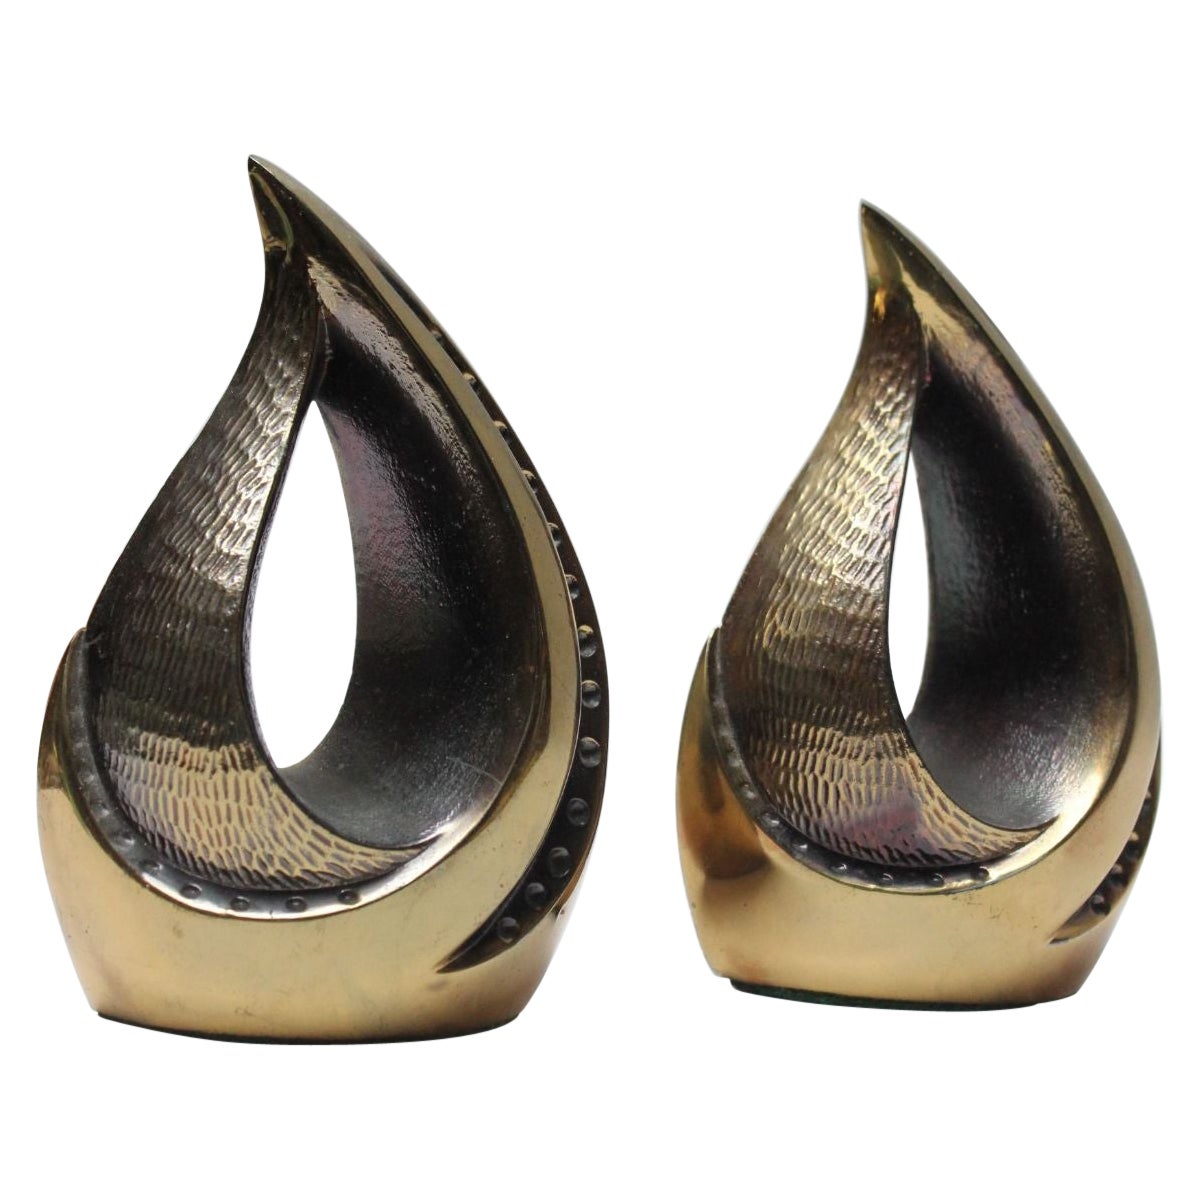 Pair of Modernist Brass "Flame" Bookends Designed by Ben Seibel for Jenfredware